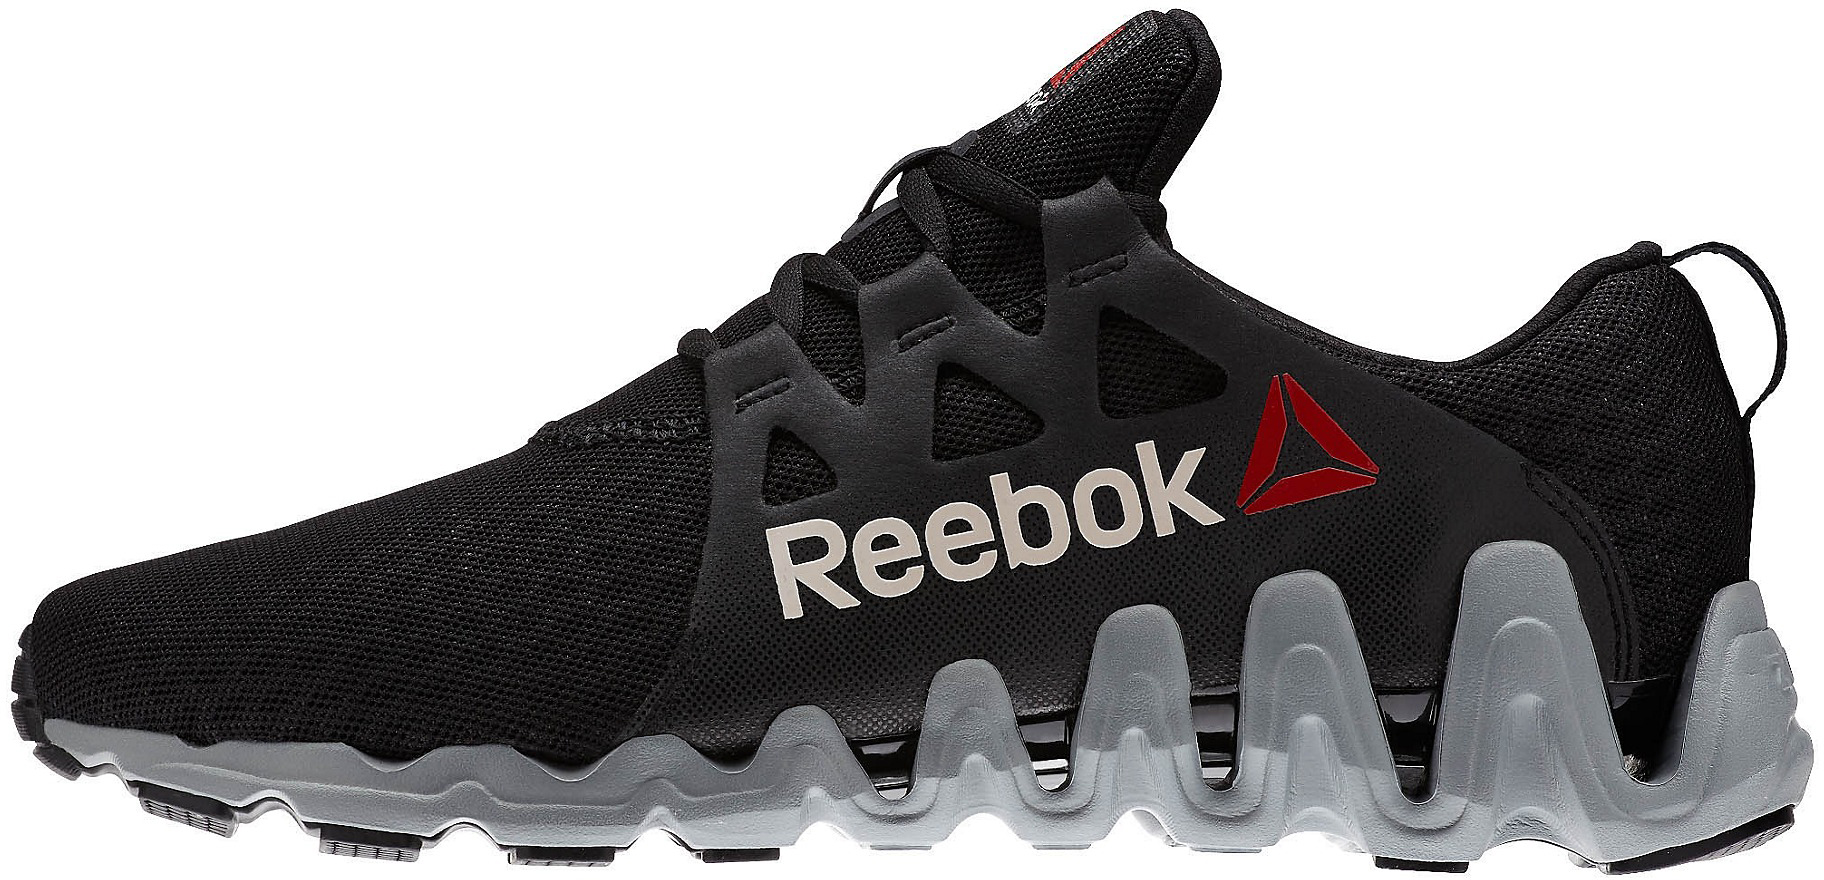 reebok-shoes-best-shoe-brands-most-popular-shoe-brands-sports-shoes-best